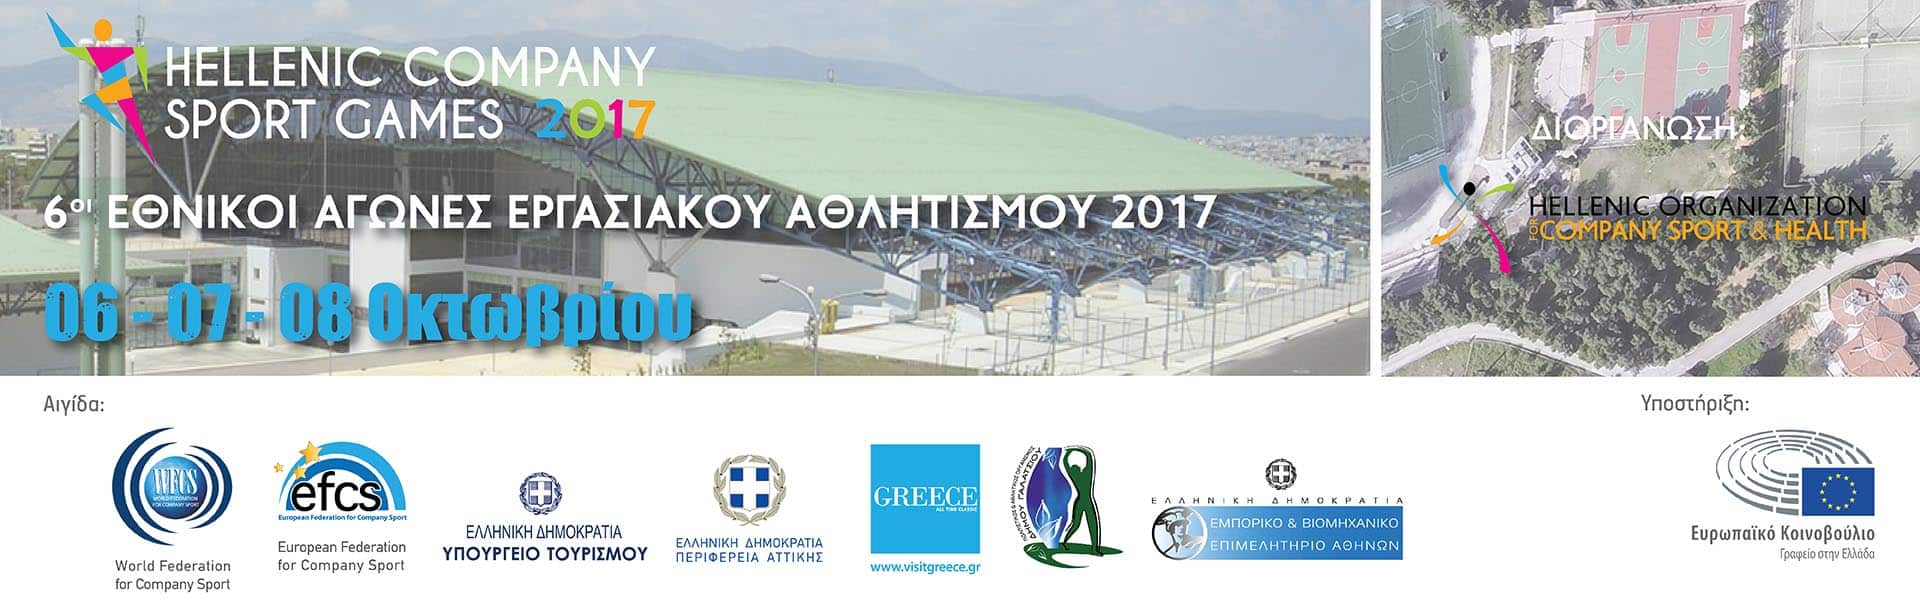 hellenic-company-sport-games-2017